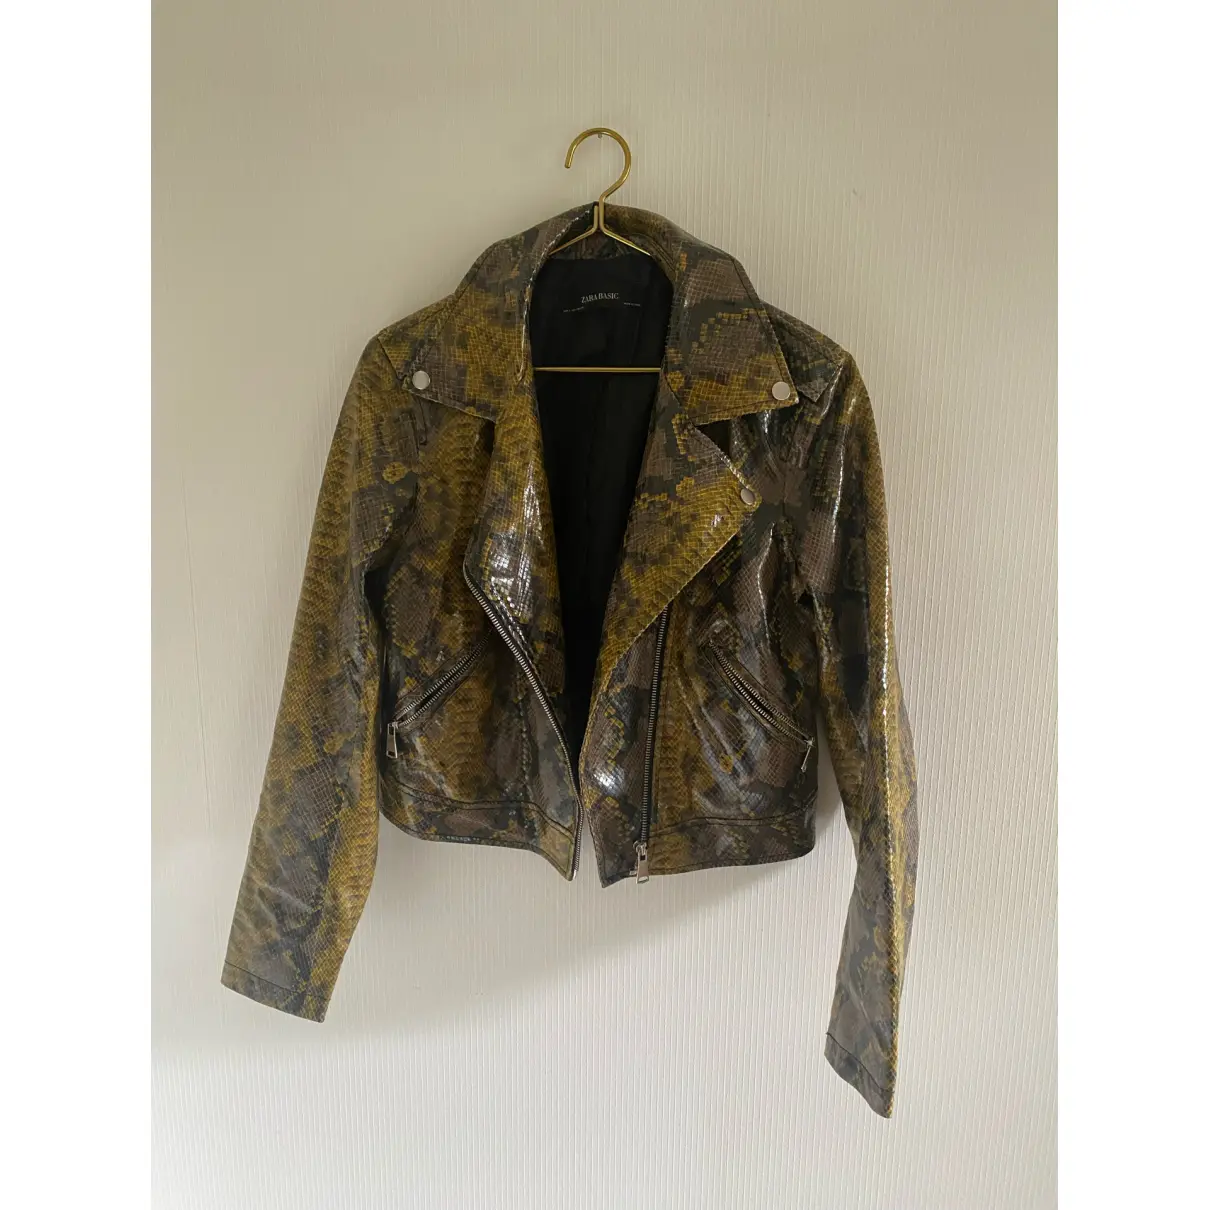 Buy Zara Vegan leather jacket online